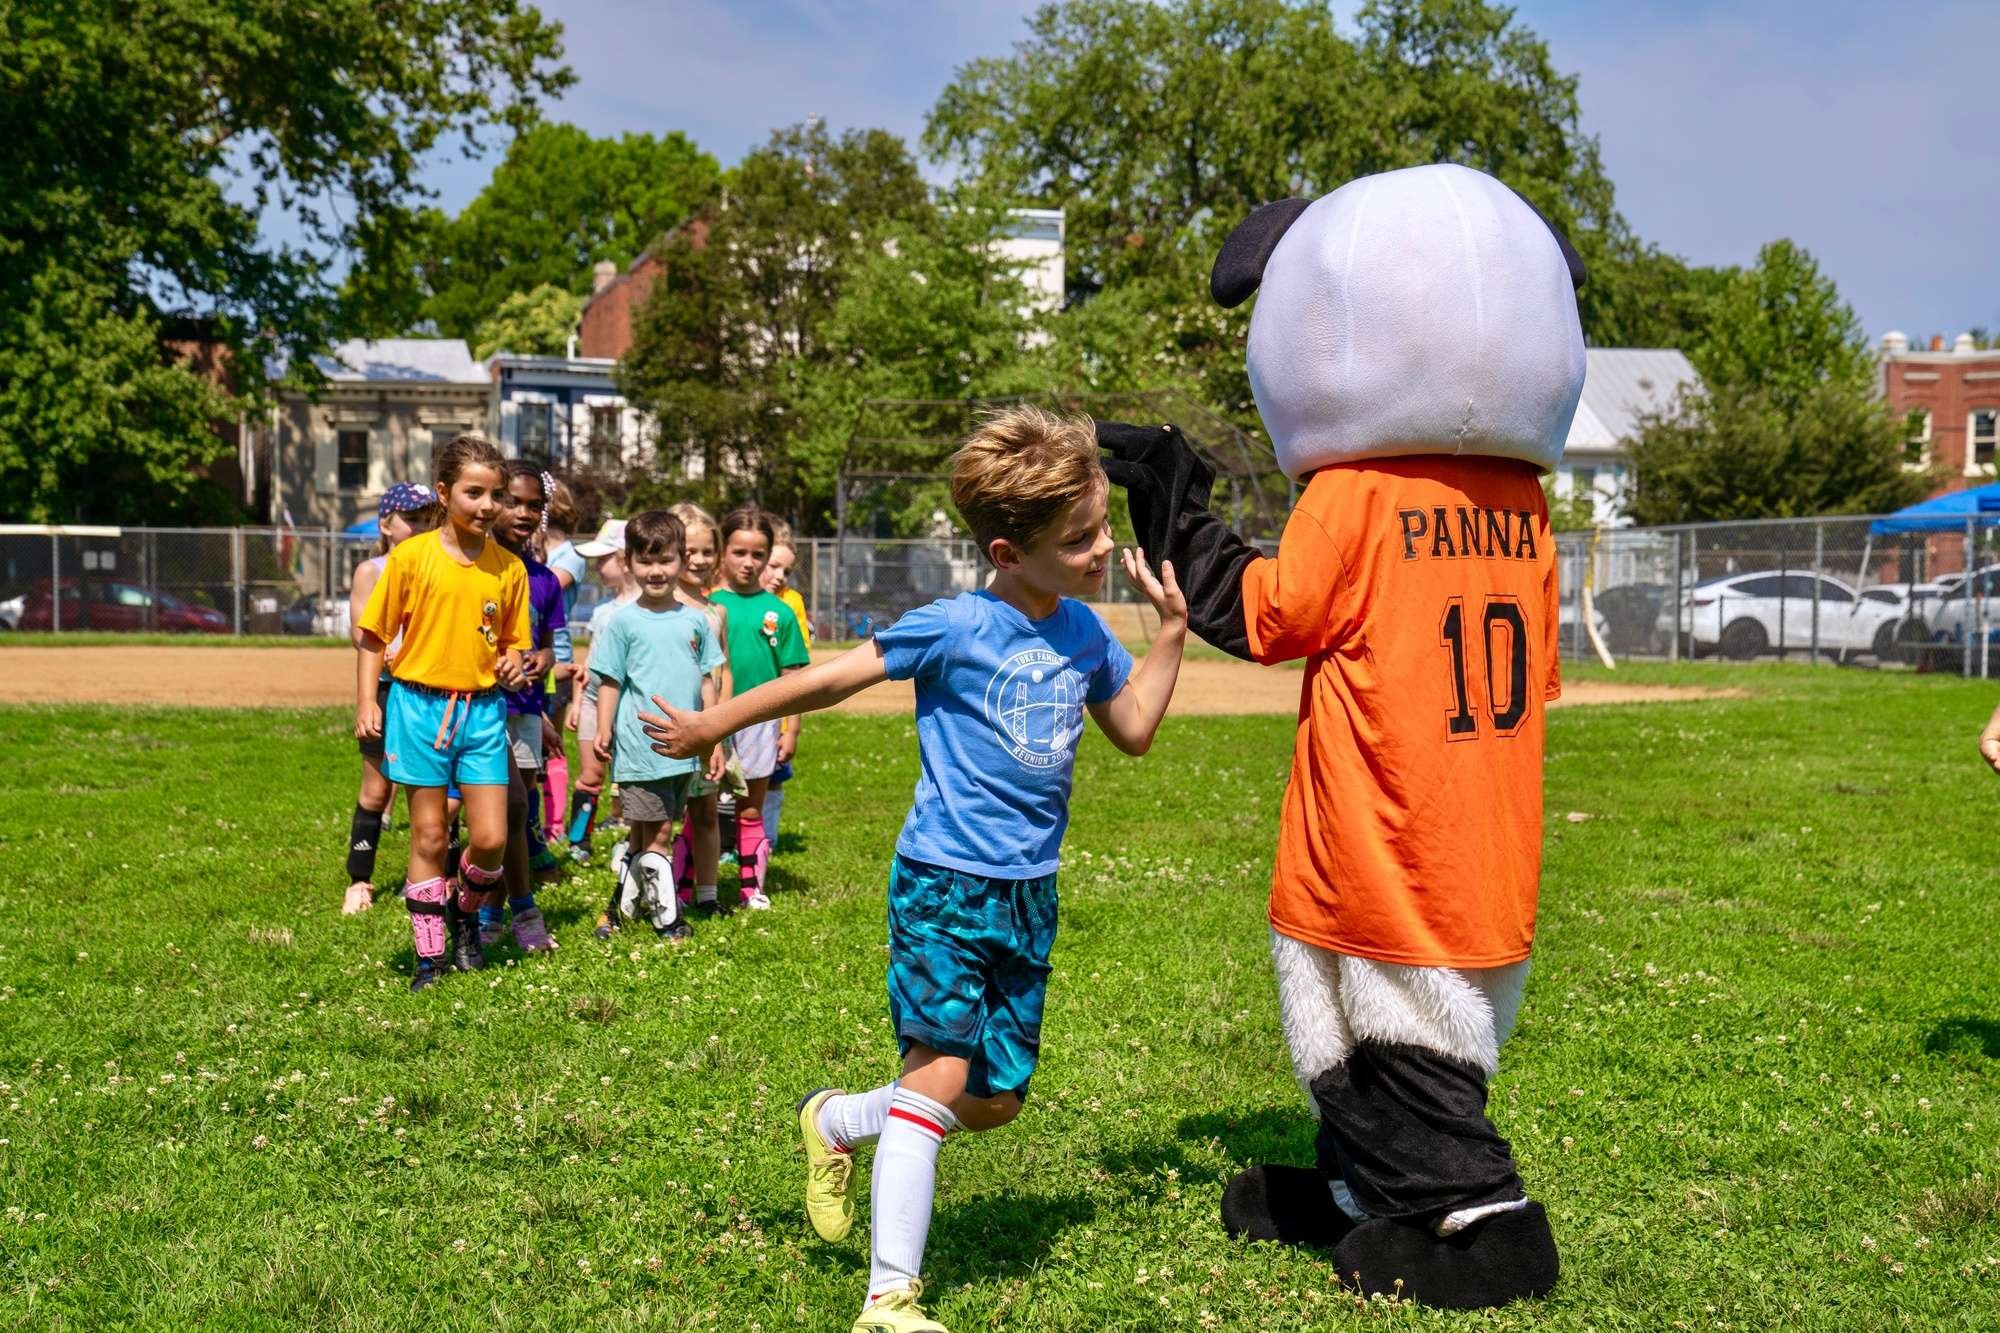 Dc-way-soccer-club-for-kids-in-washington-dc-summer-camp-at-tyler-elementary-school- 0207.jpg